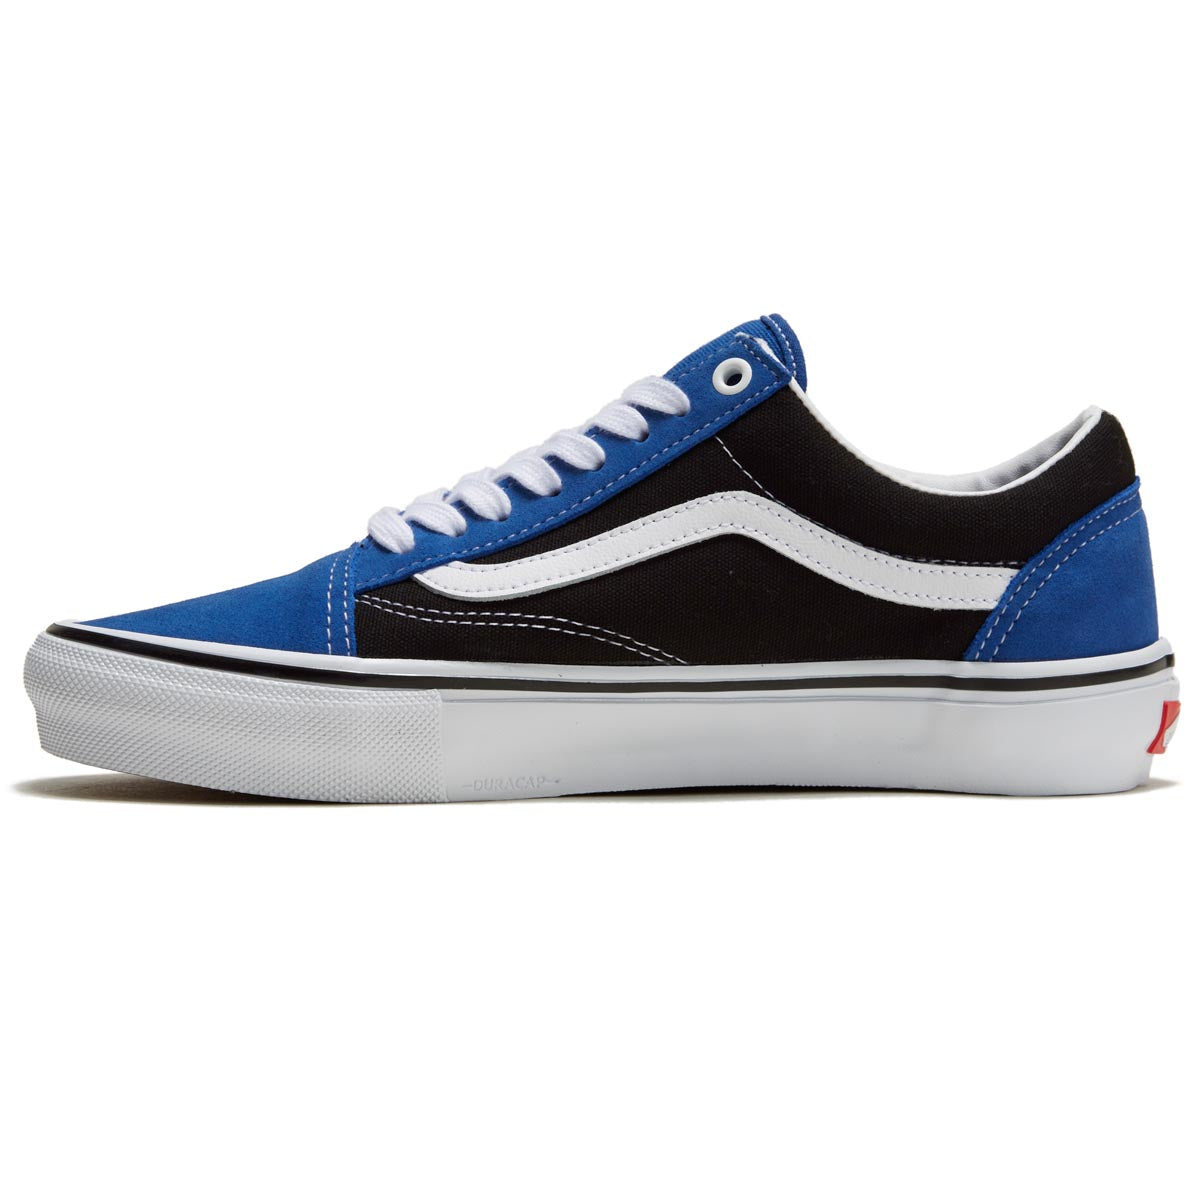 Vans Skate Old Skool Shoes - Blue/Black/White image 2